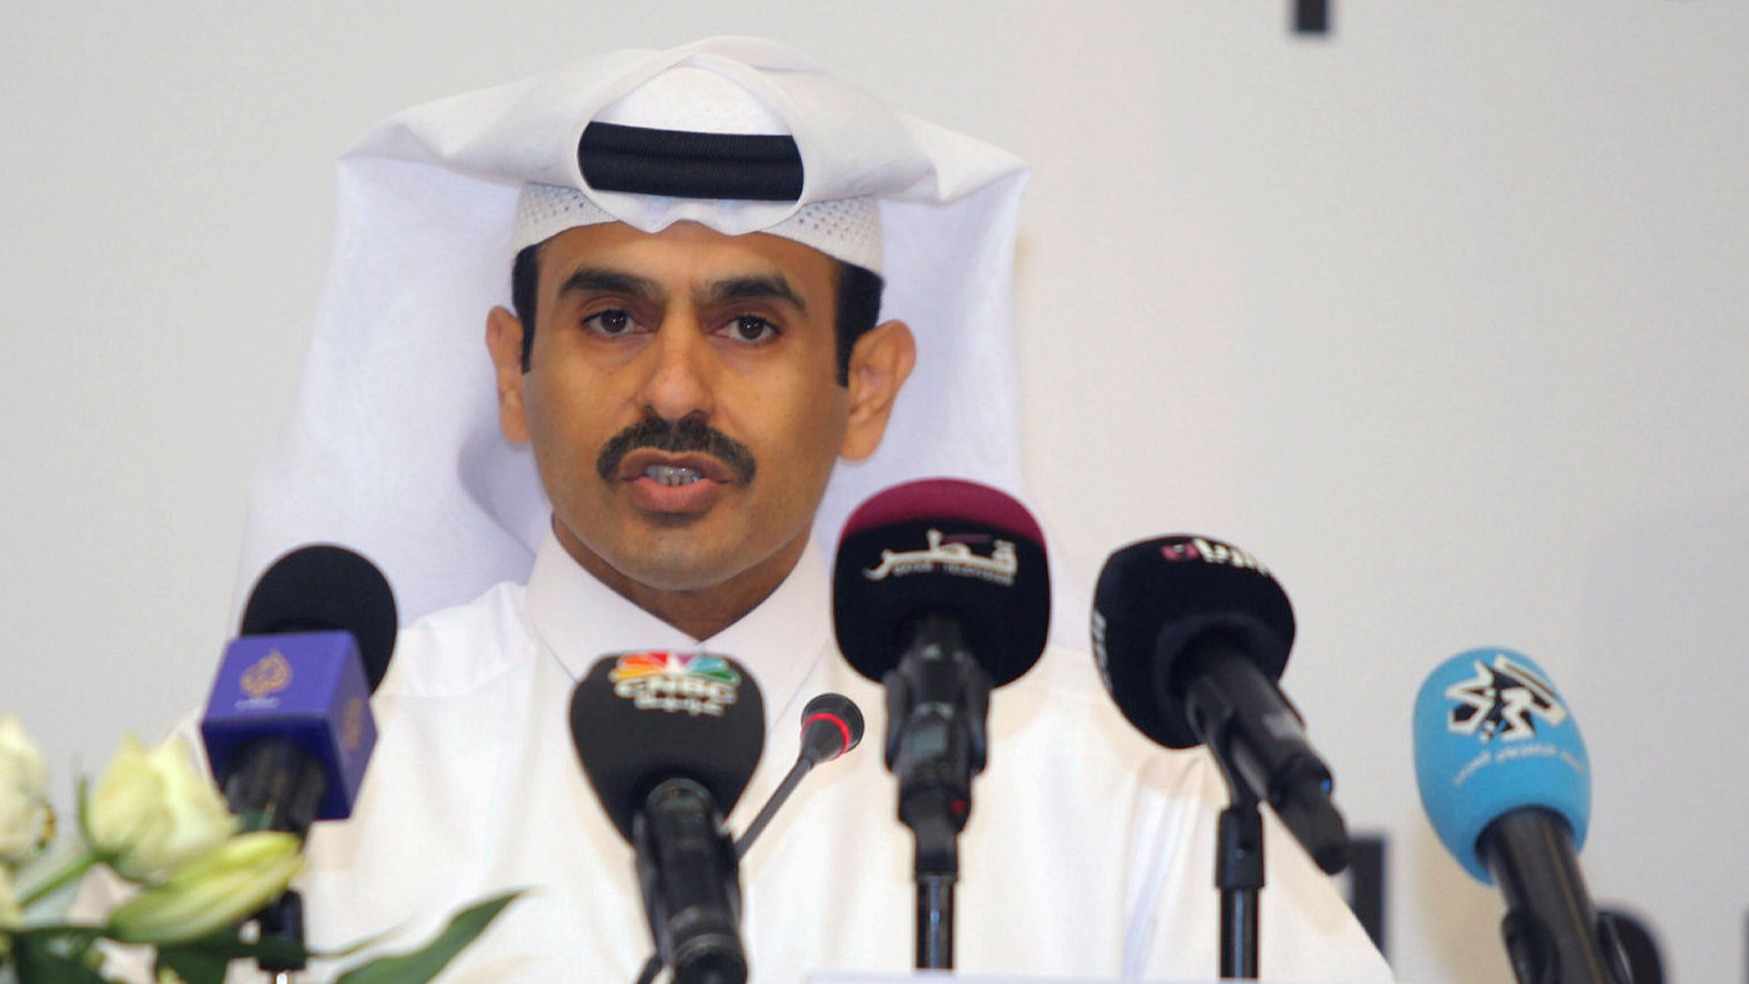 qatar gas spikes expansion